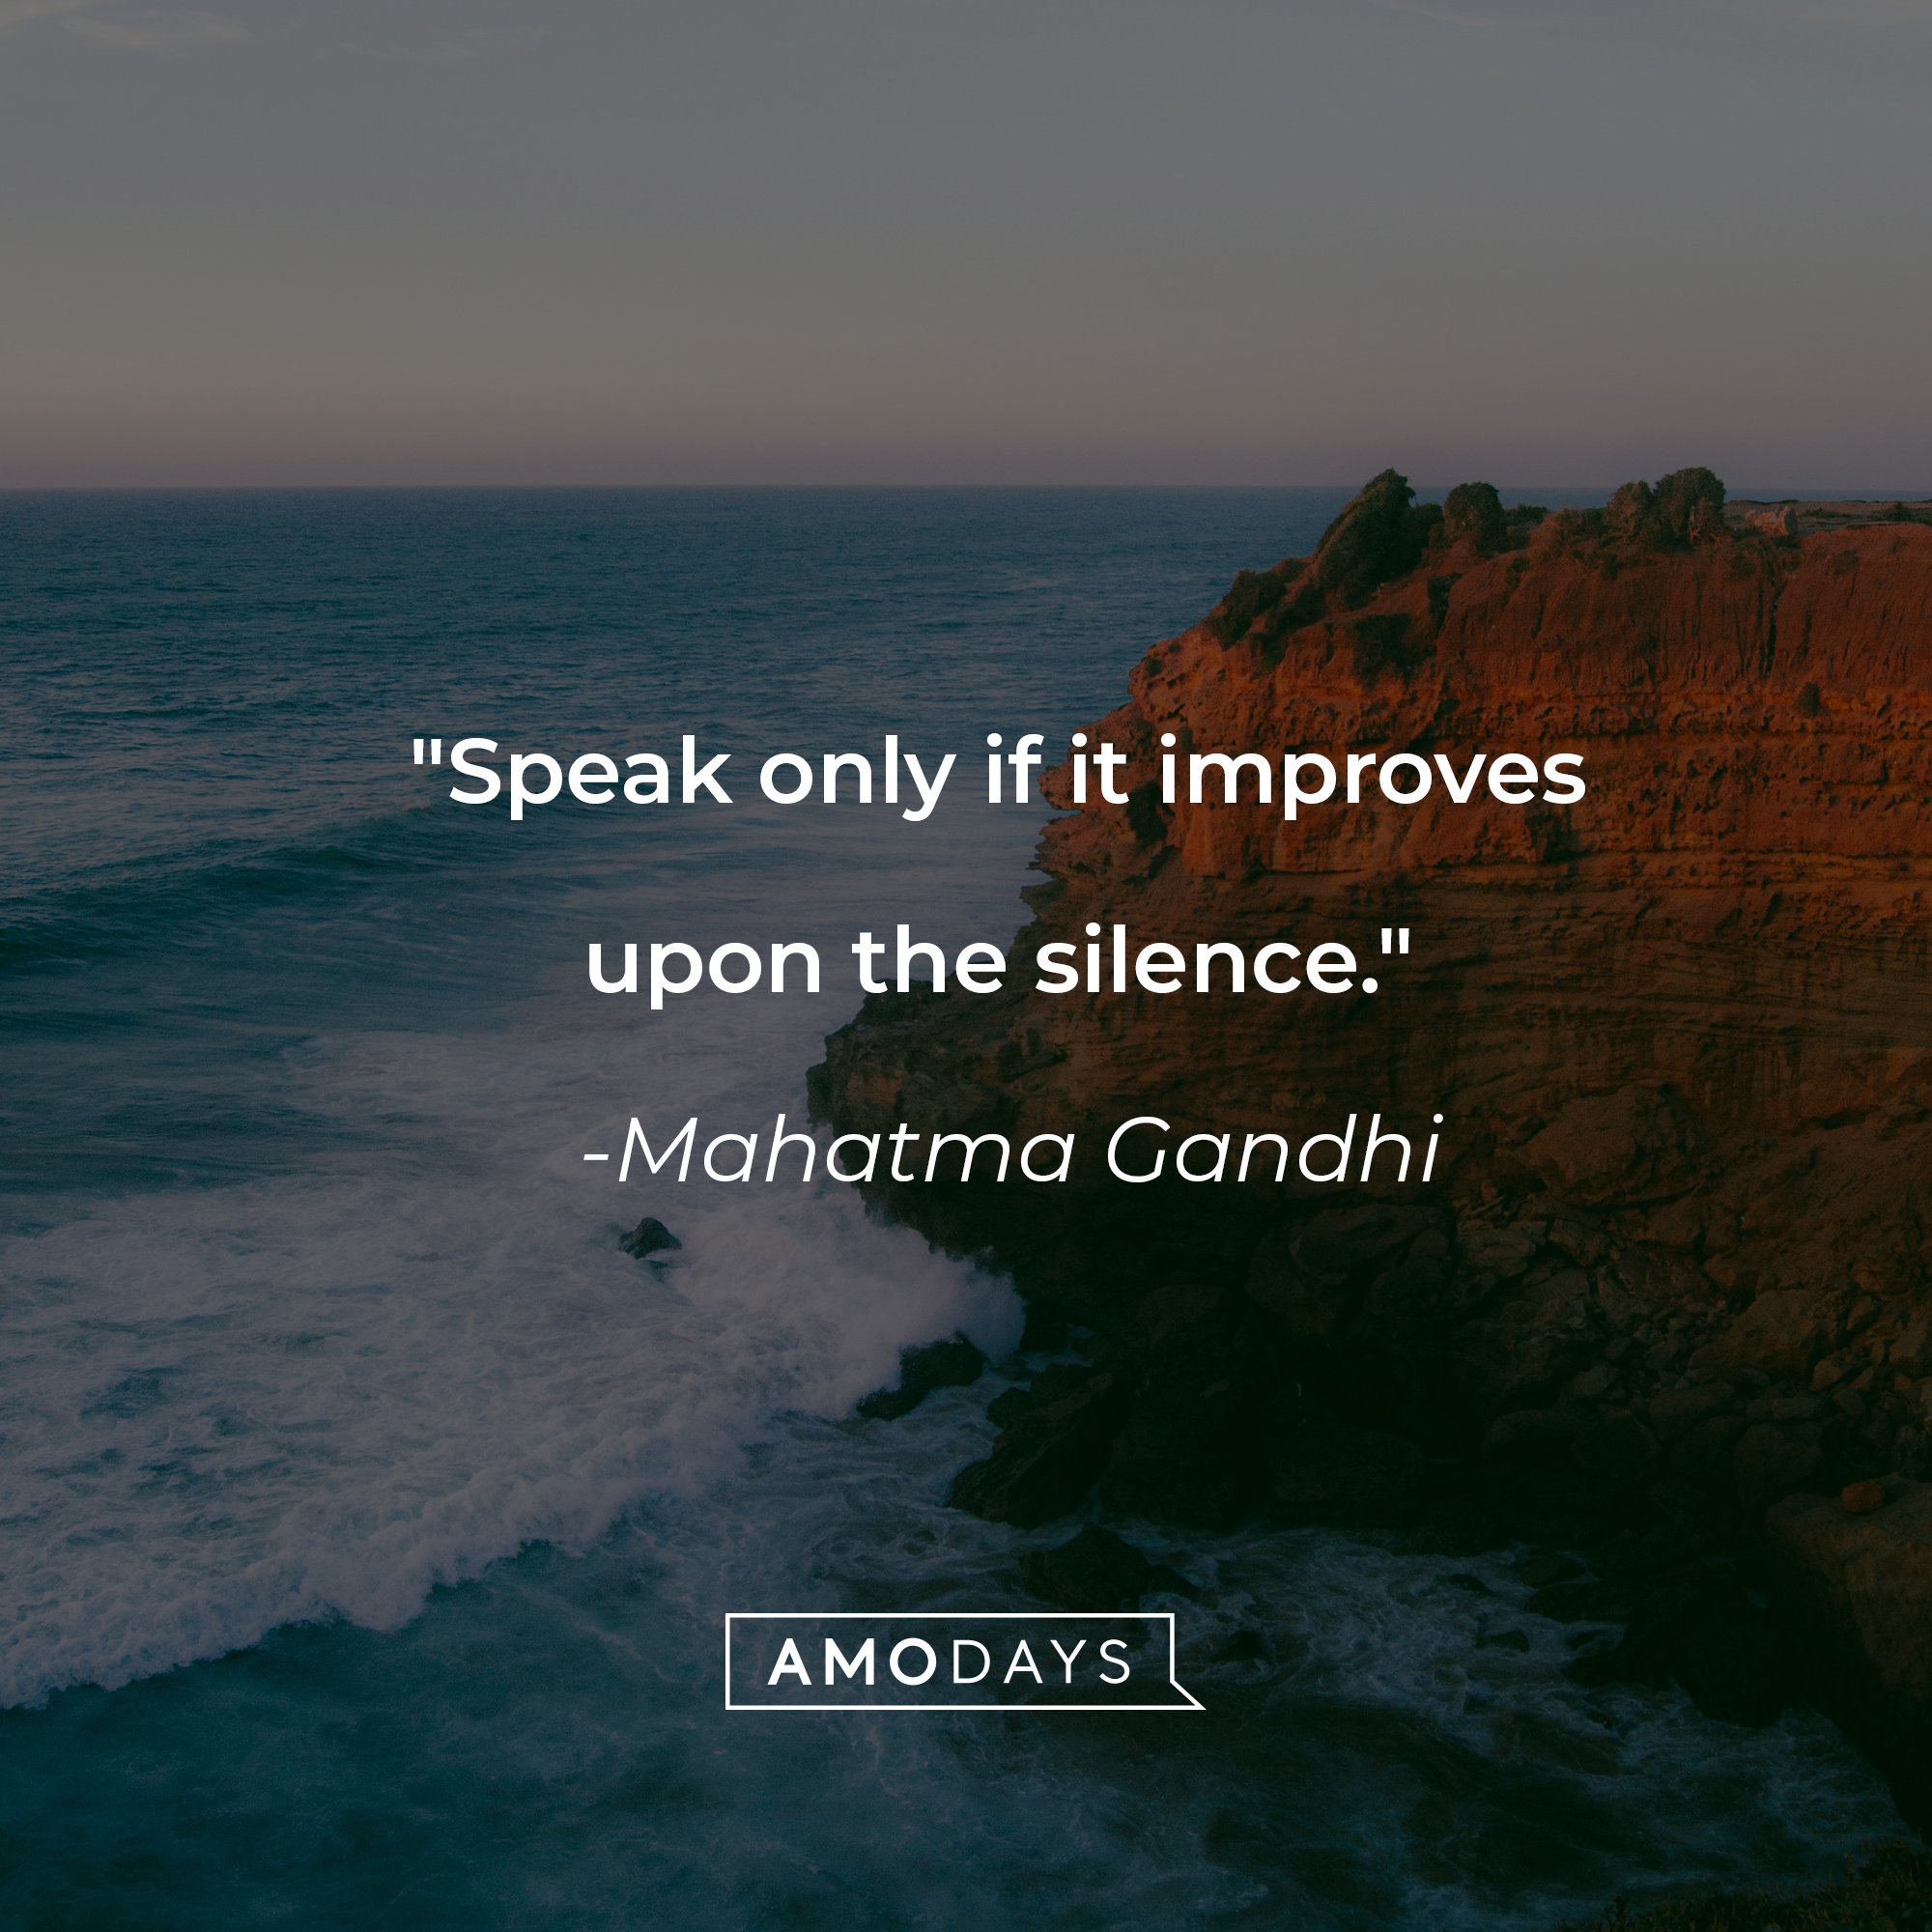 Mahatma Gandhi's quote: "Speak only if it improves upon the silence." | Image: AmoDays 